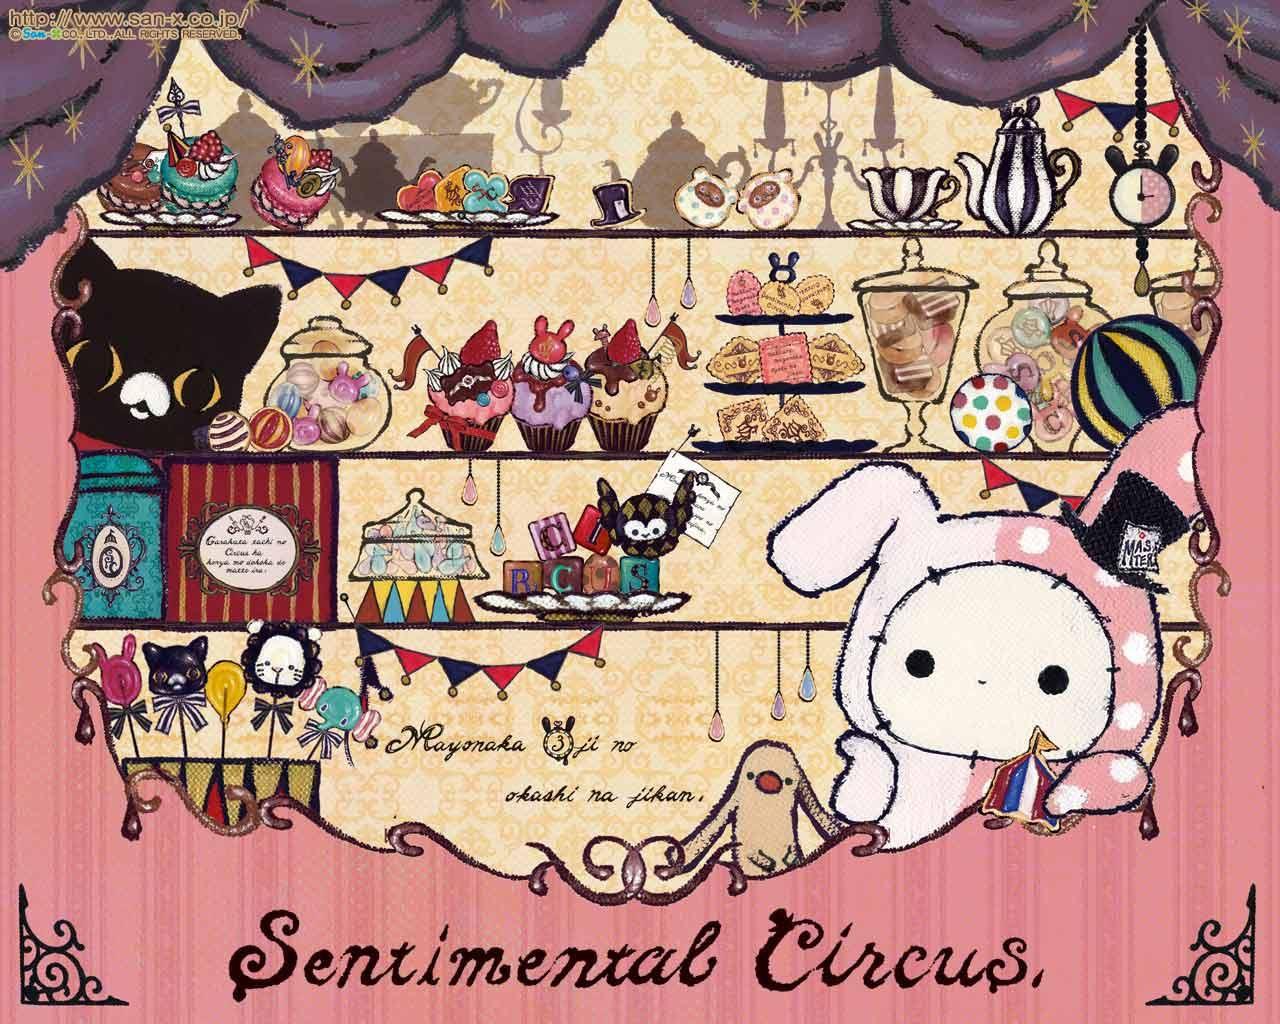 Sentimental Circus Wallpapers Top Free Sentimental Circus Backgrounds Wallpaperaccess